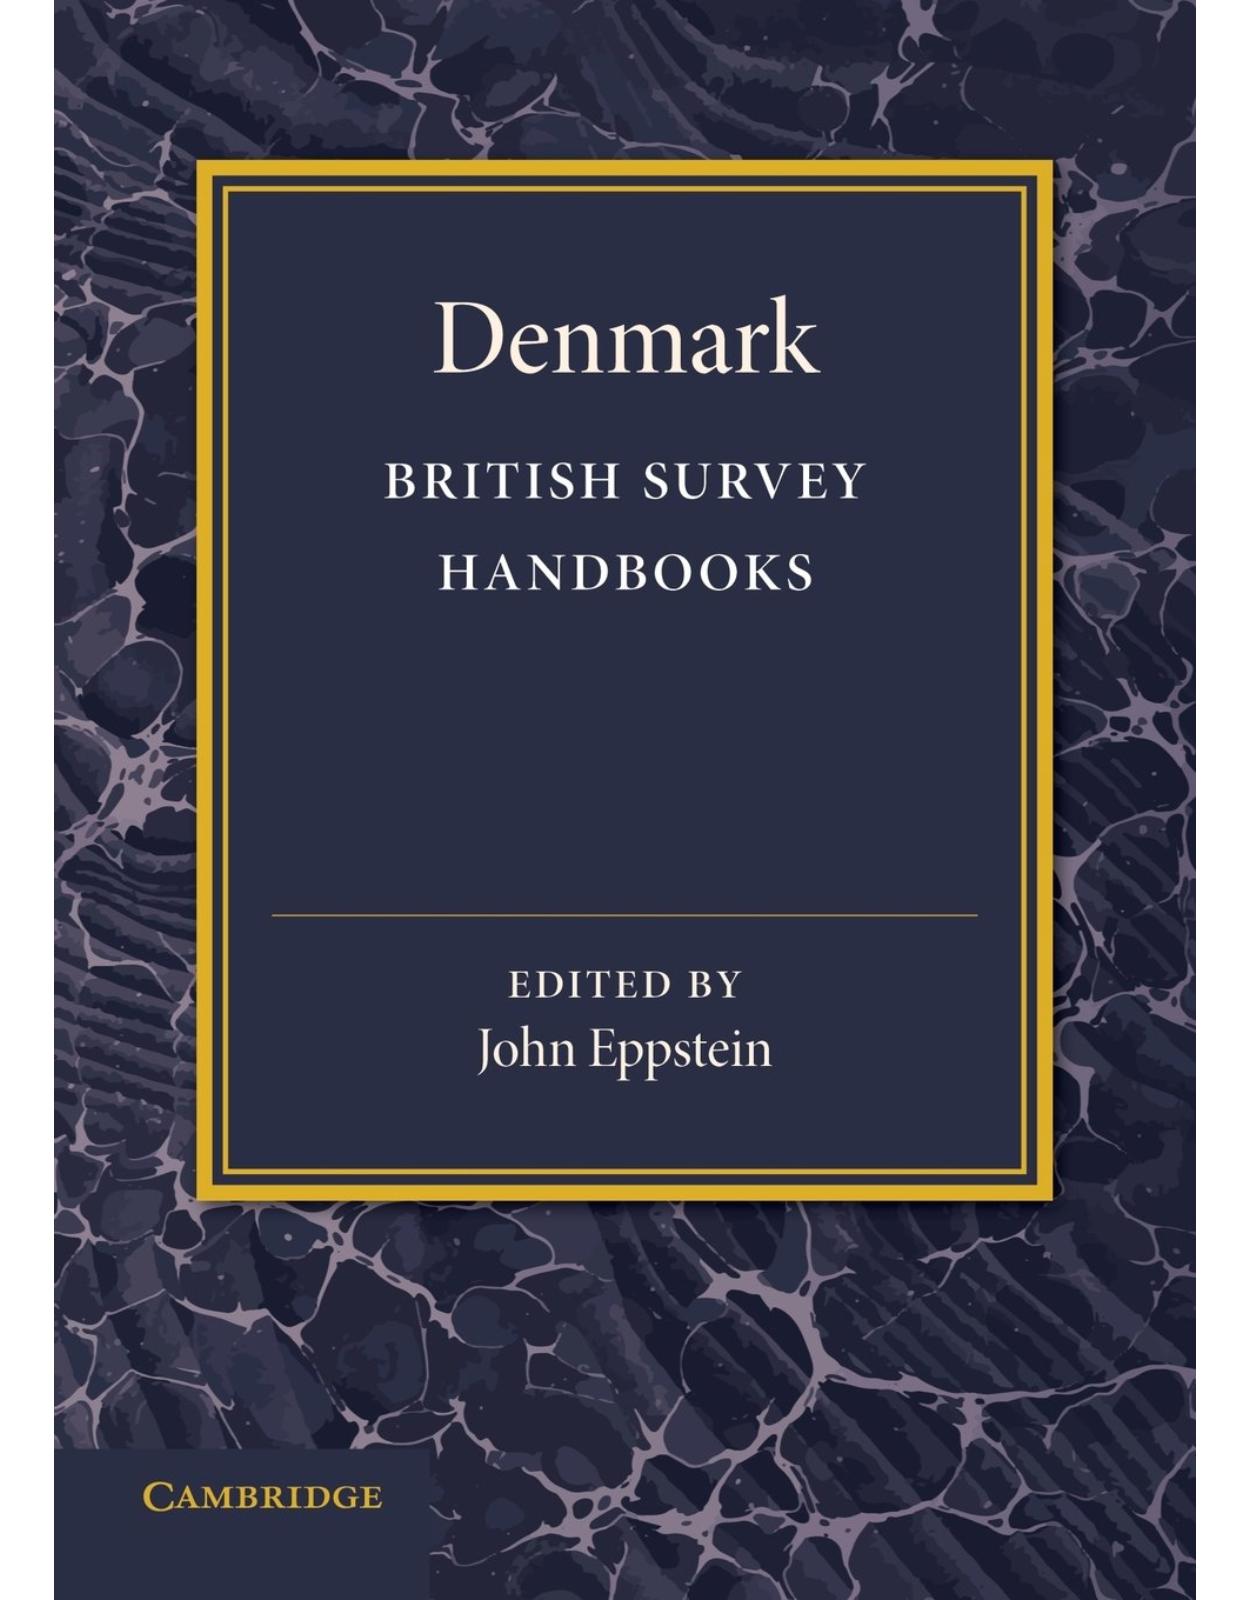 Denmark (British Survey Handbooks)